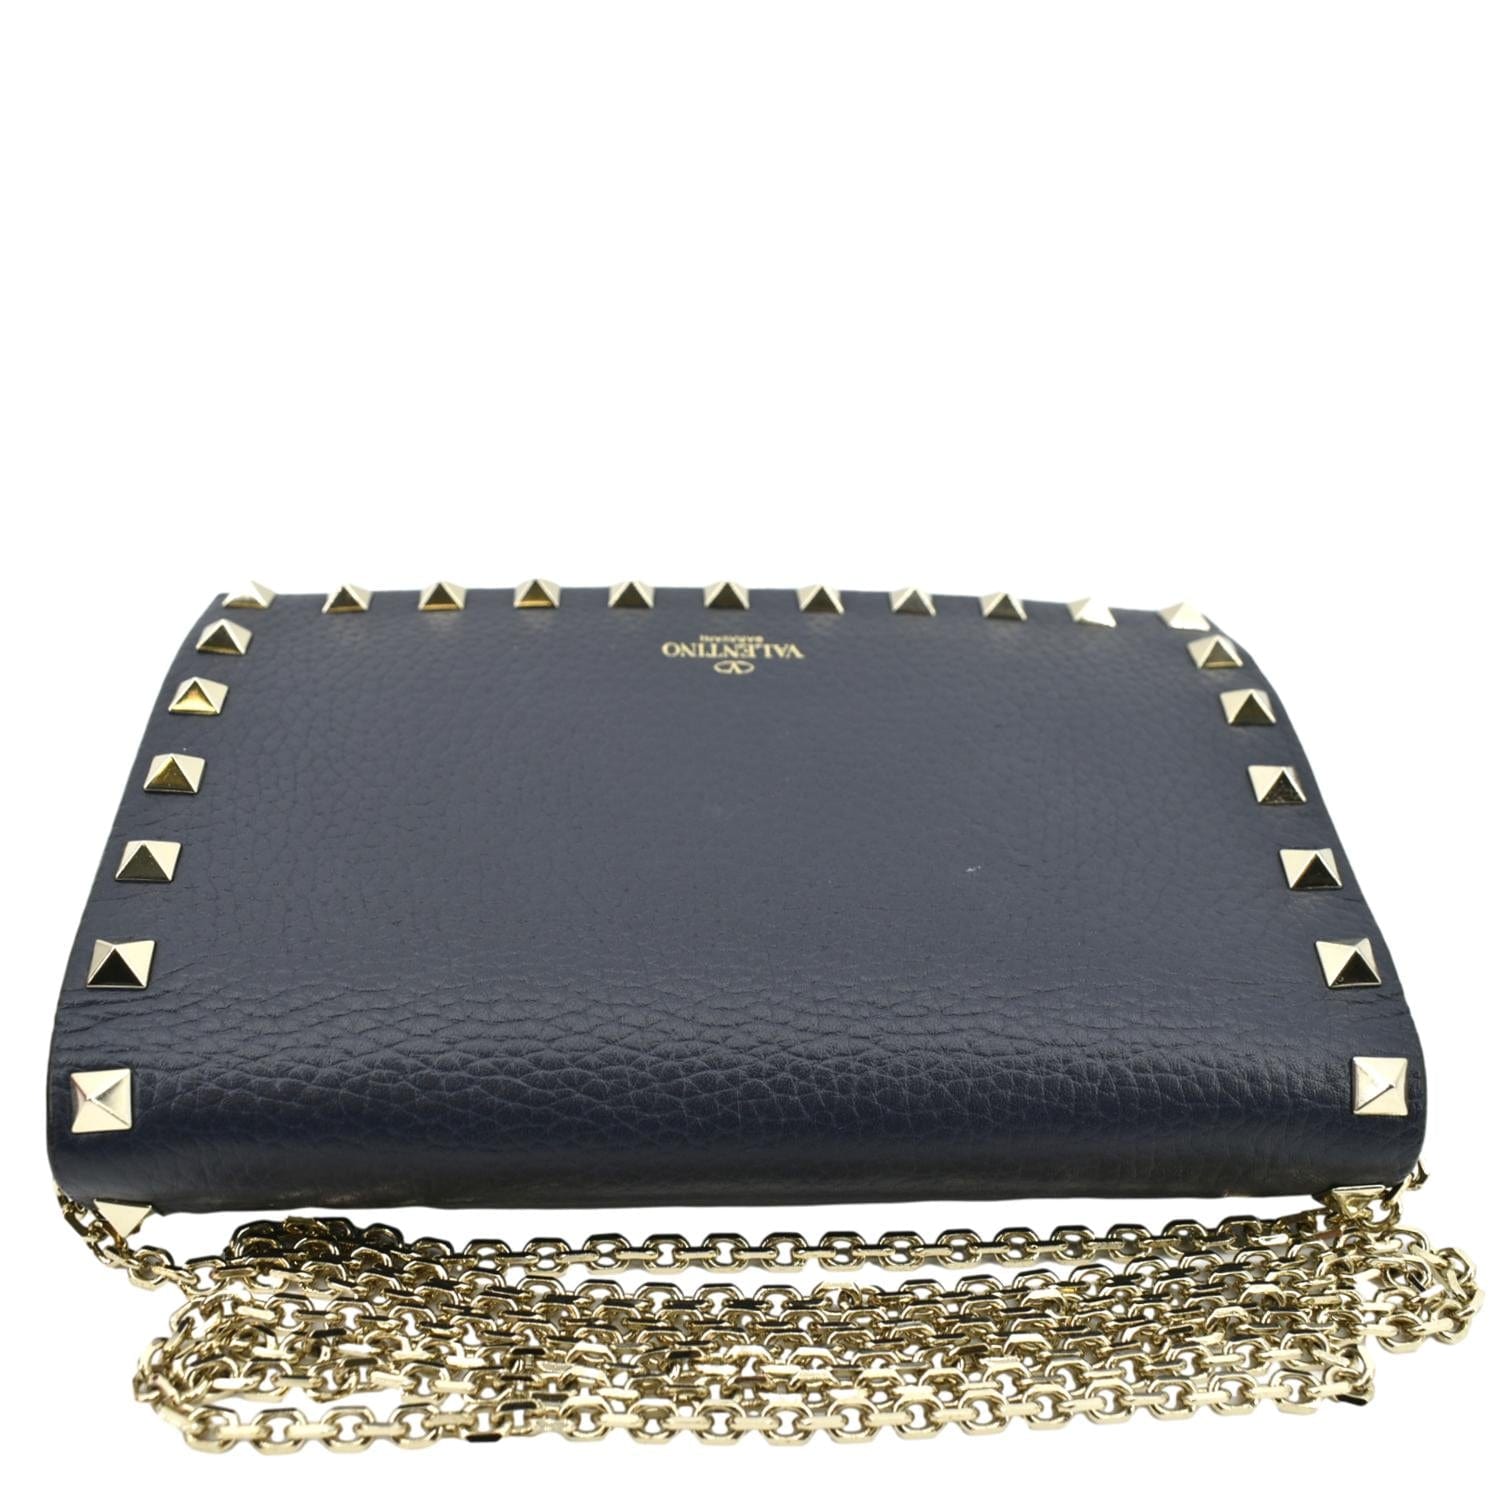 New Valentino Va Va Voom Rockstud Chain Bag Blue Leather NWT $2275